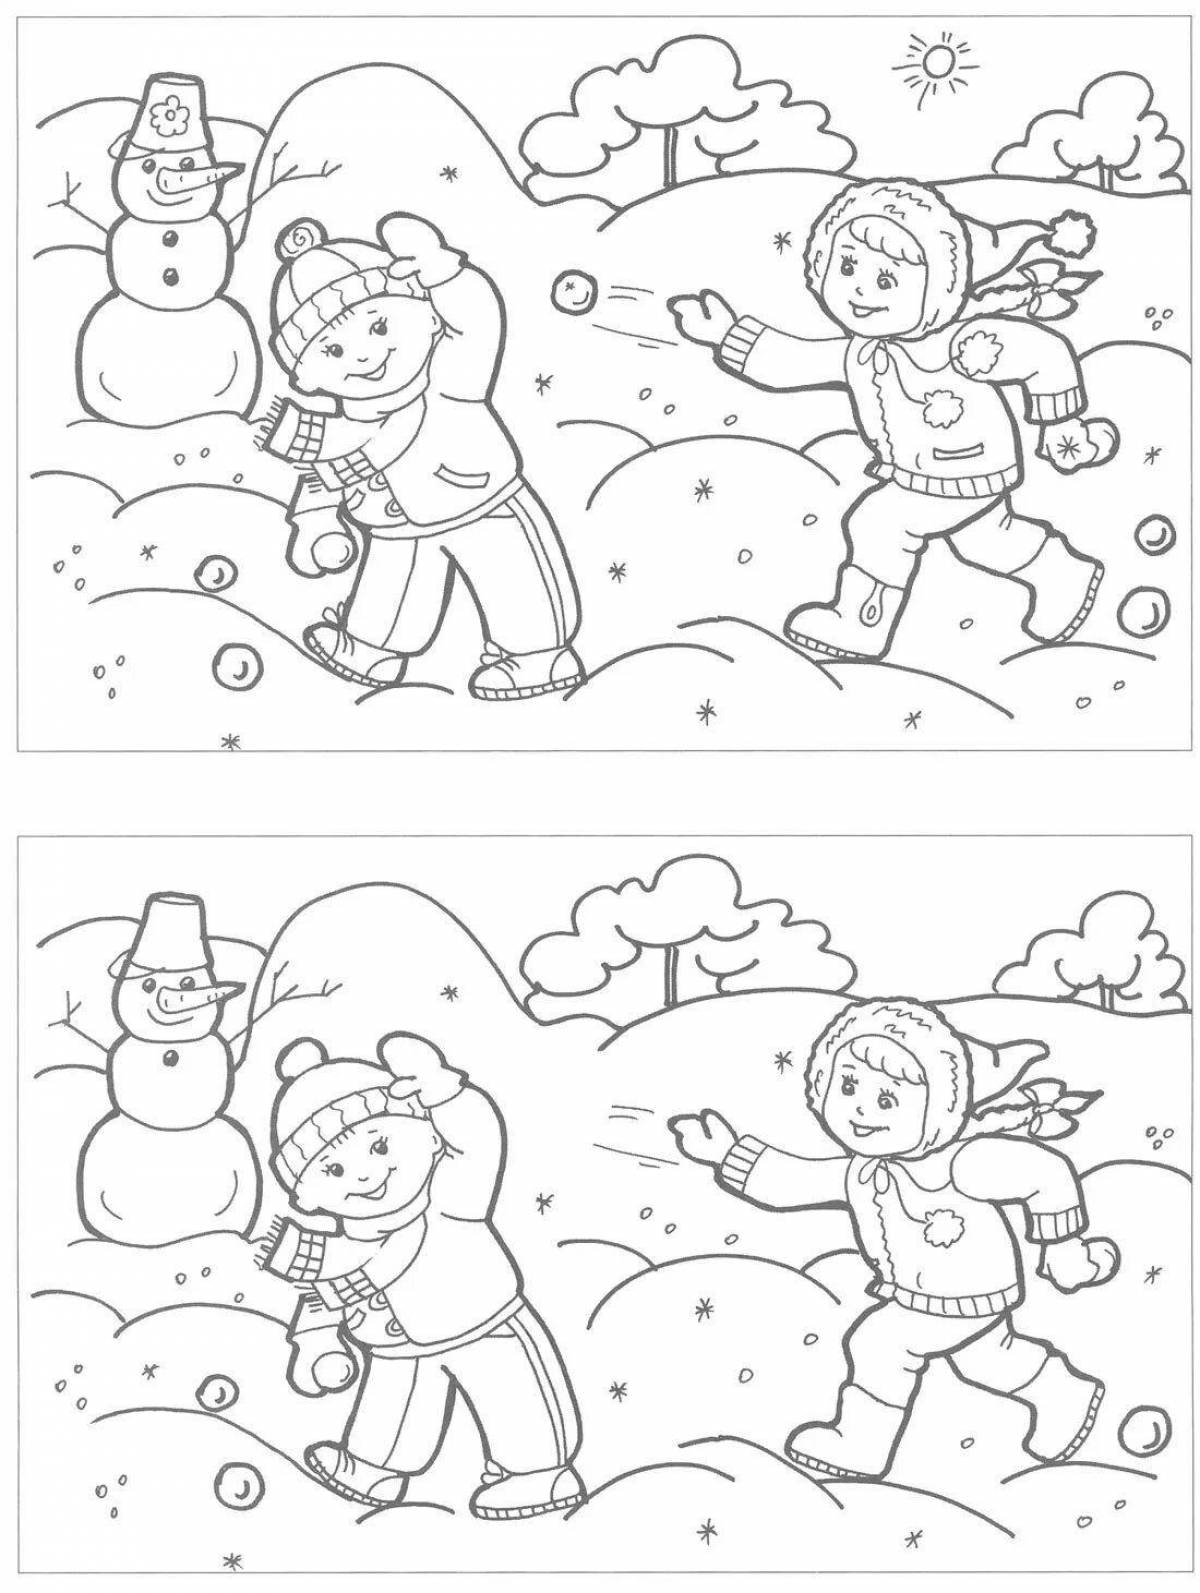 Pre-k winter wonderland coloring page